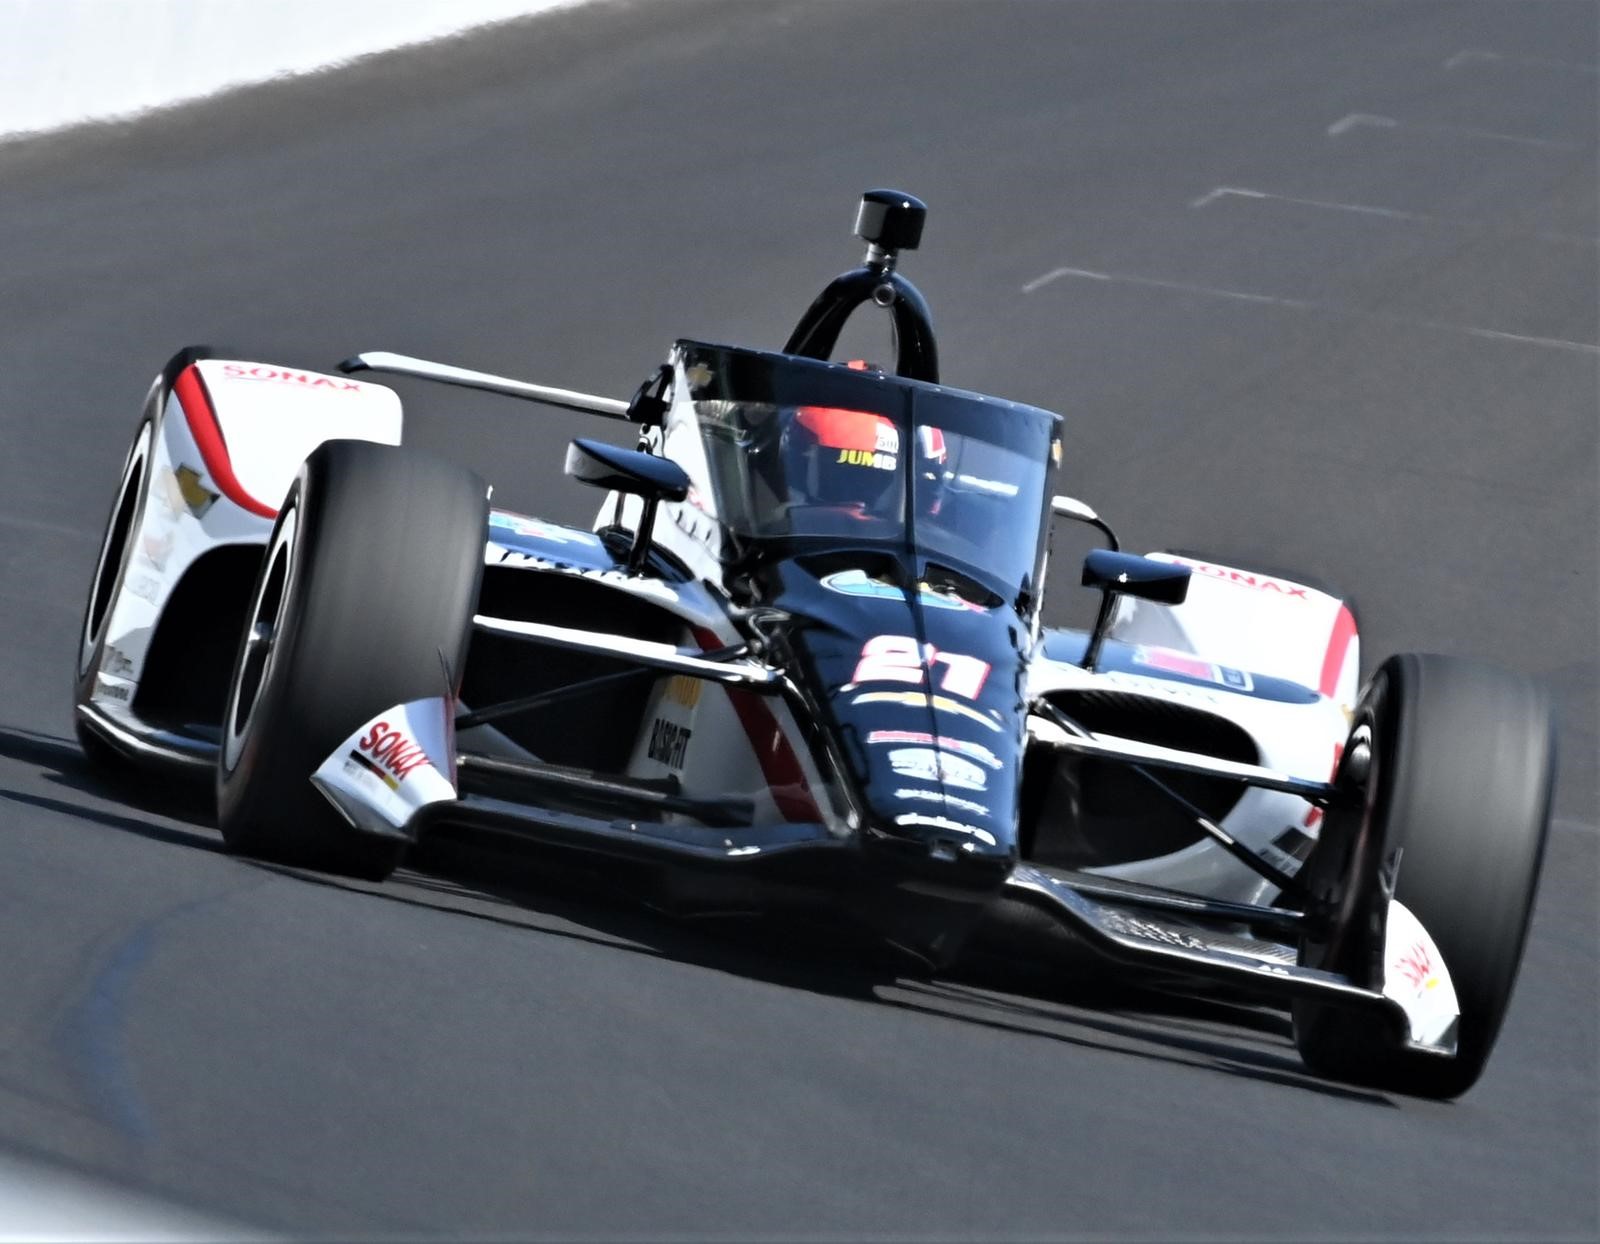 Rinus Veekay Indy500 2020 debut - On track Indianapolis Motorspeedway